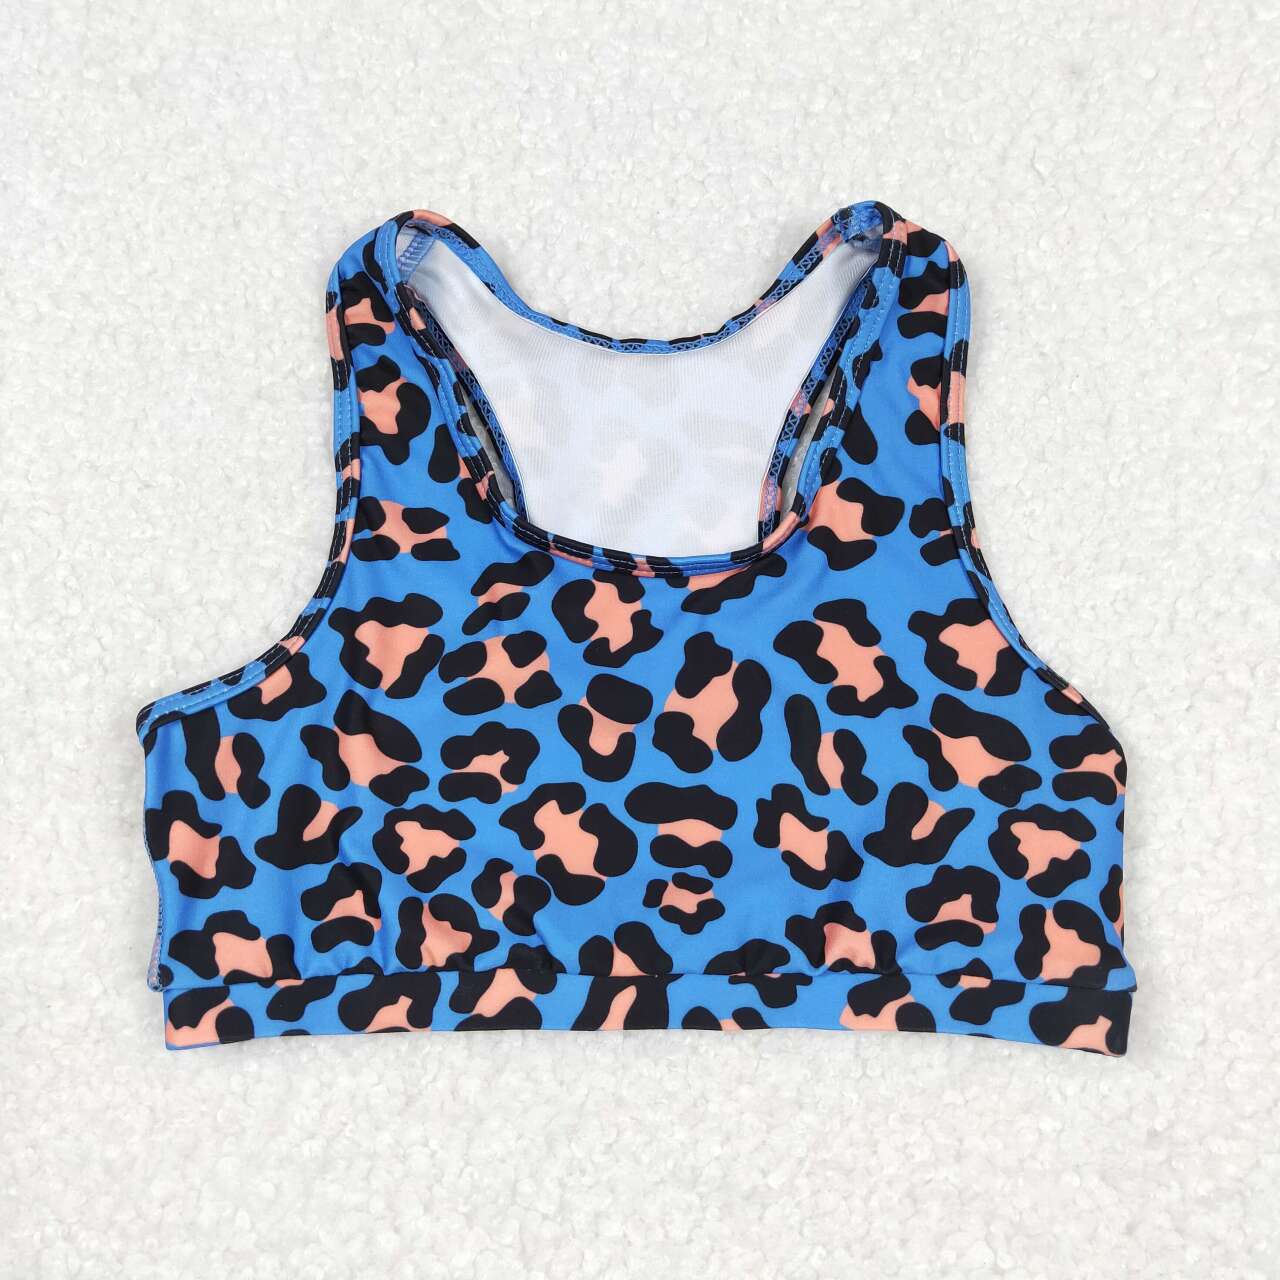 GT0517 Blue and orange leopard print sleeveless top